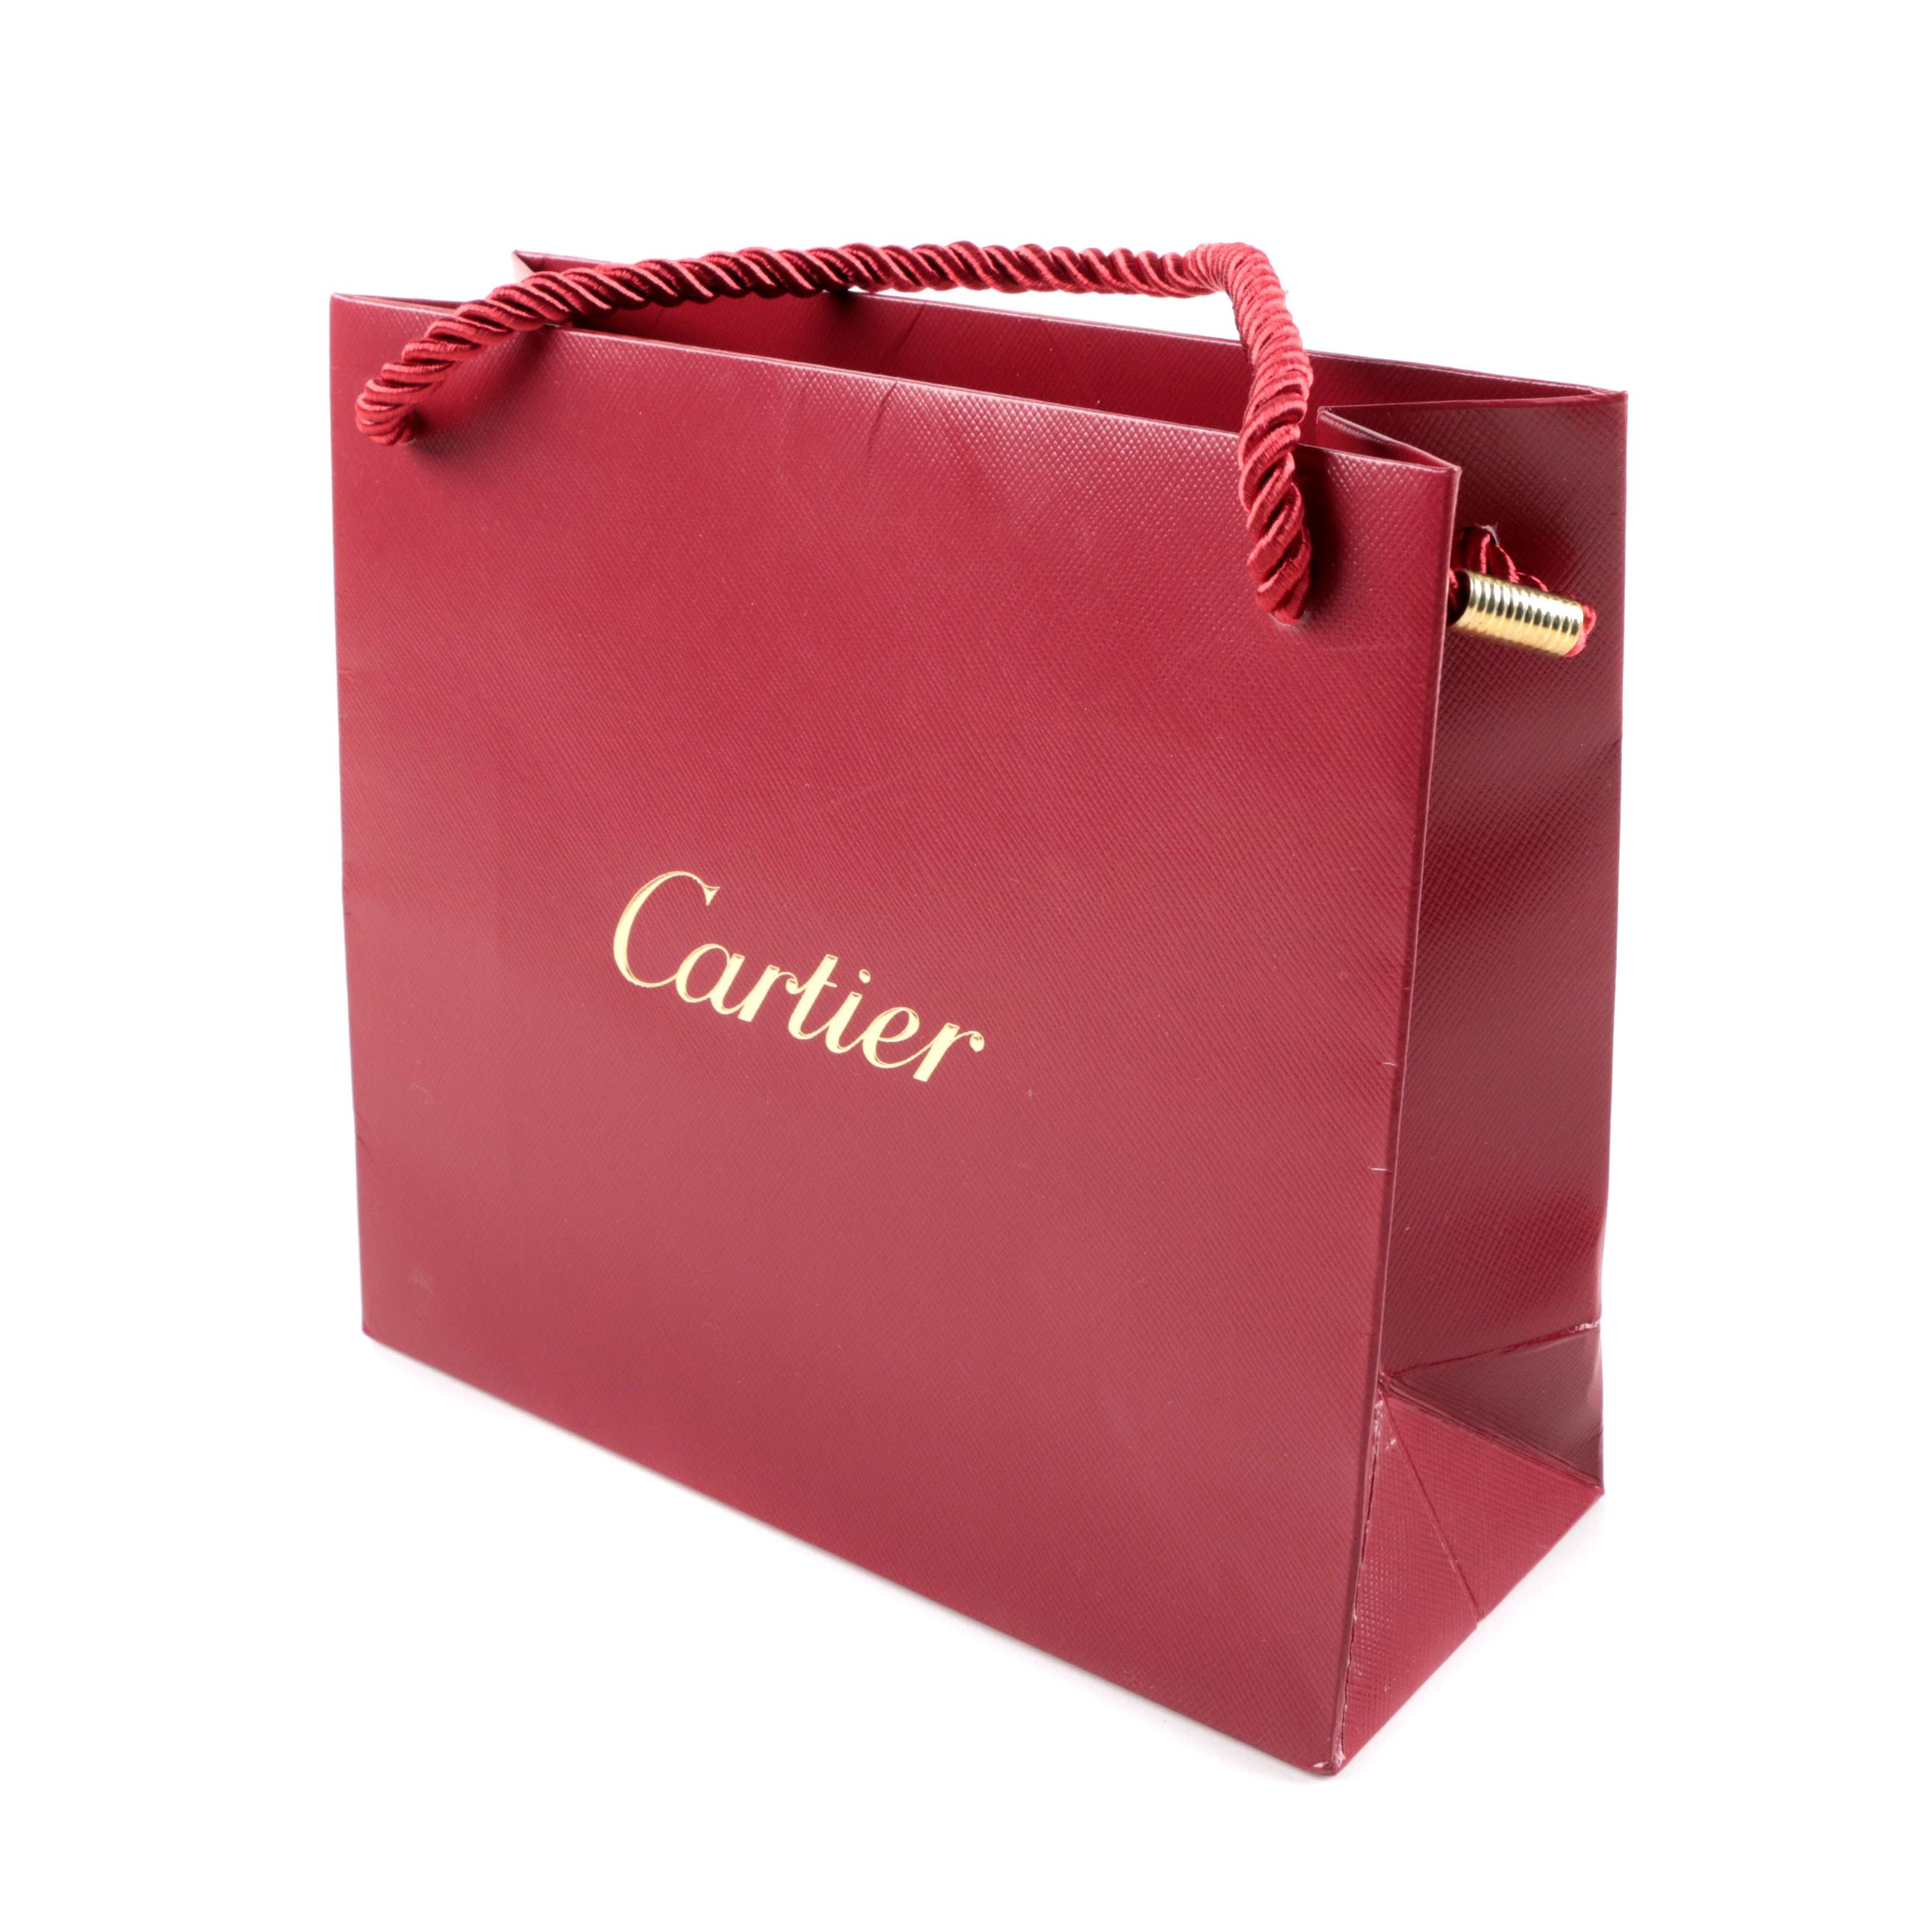 cartier gift bags